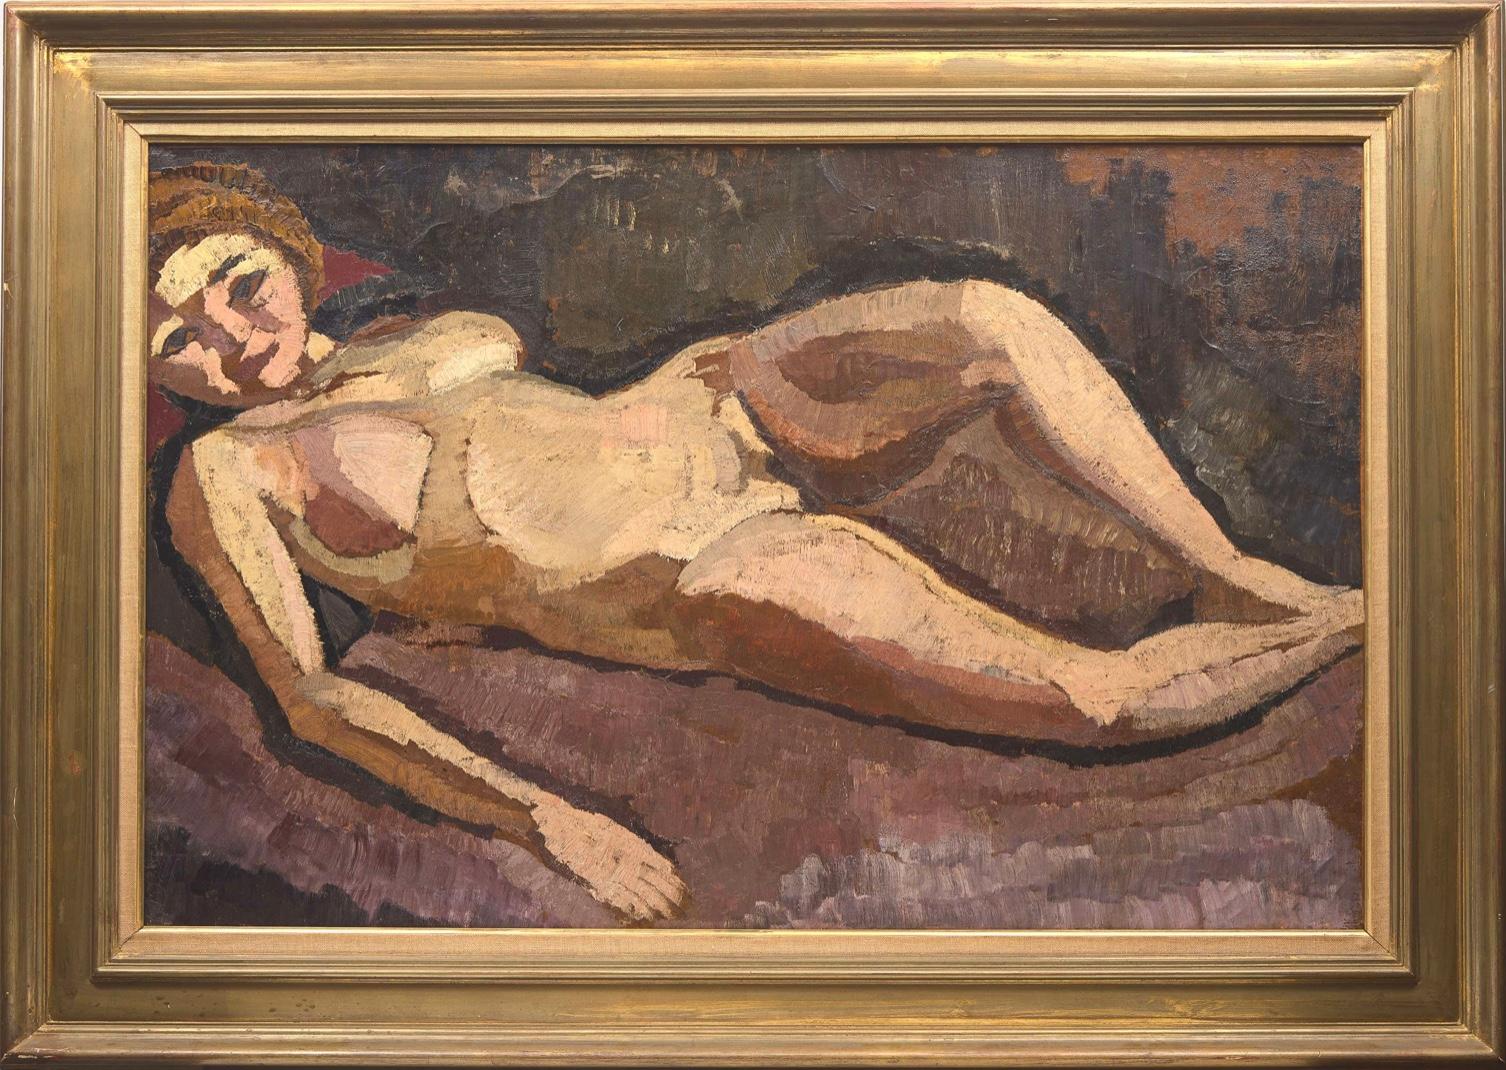 Expressionist Roger de la Fresnaye (French, 1885-1925) - Femme Nue Couchée